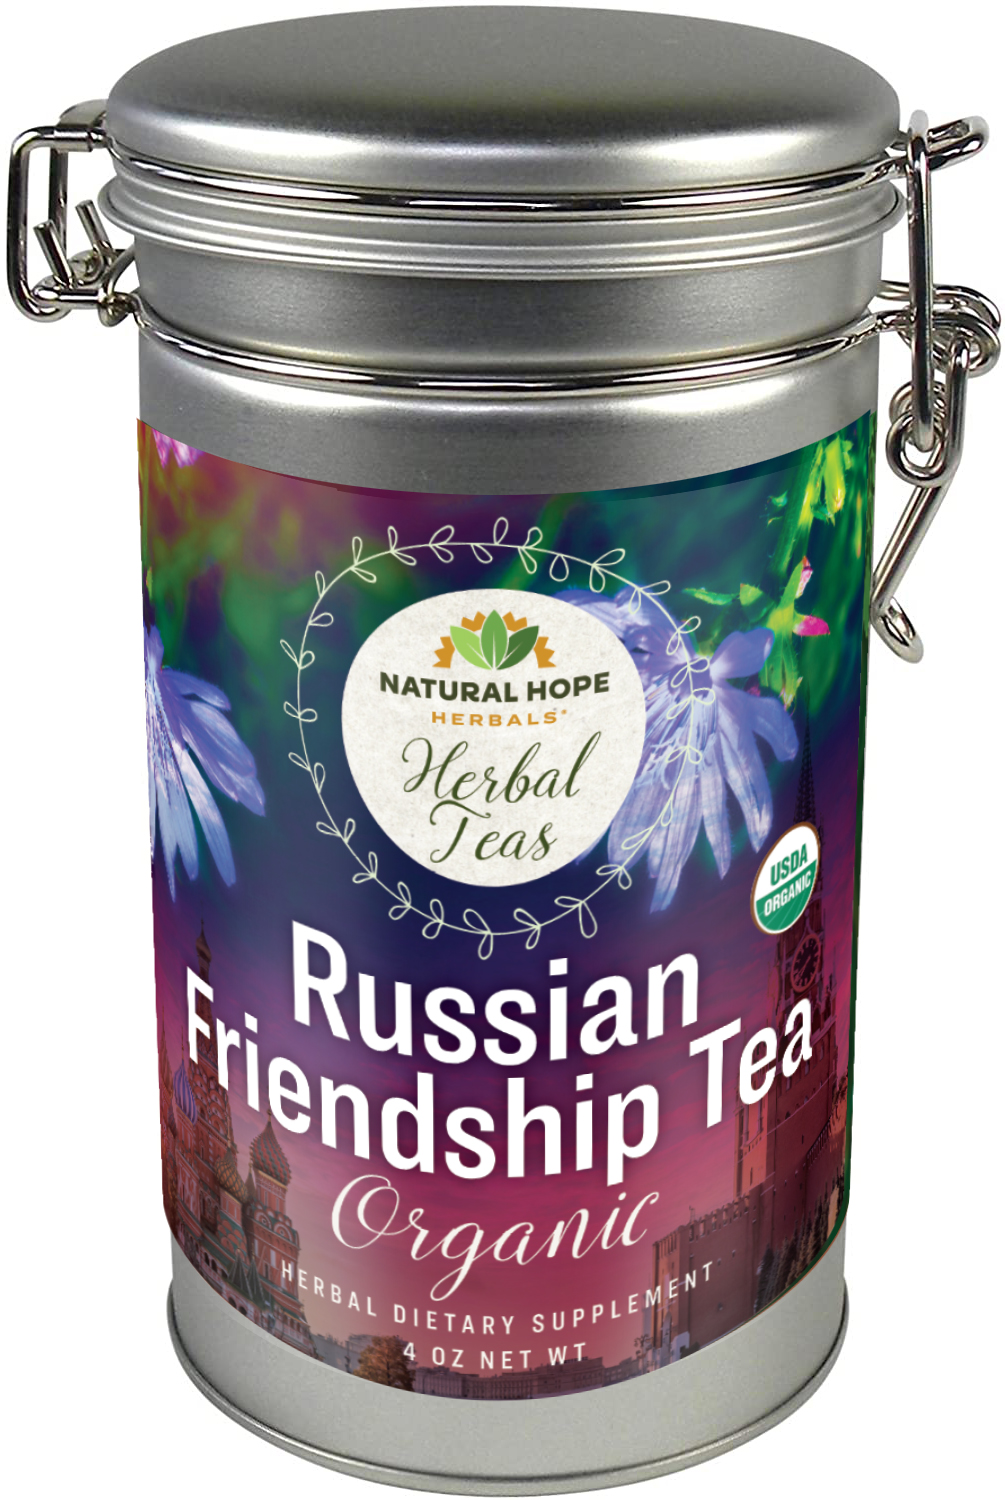 Russian Friendship Tea